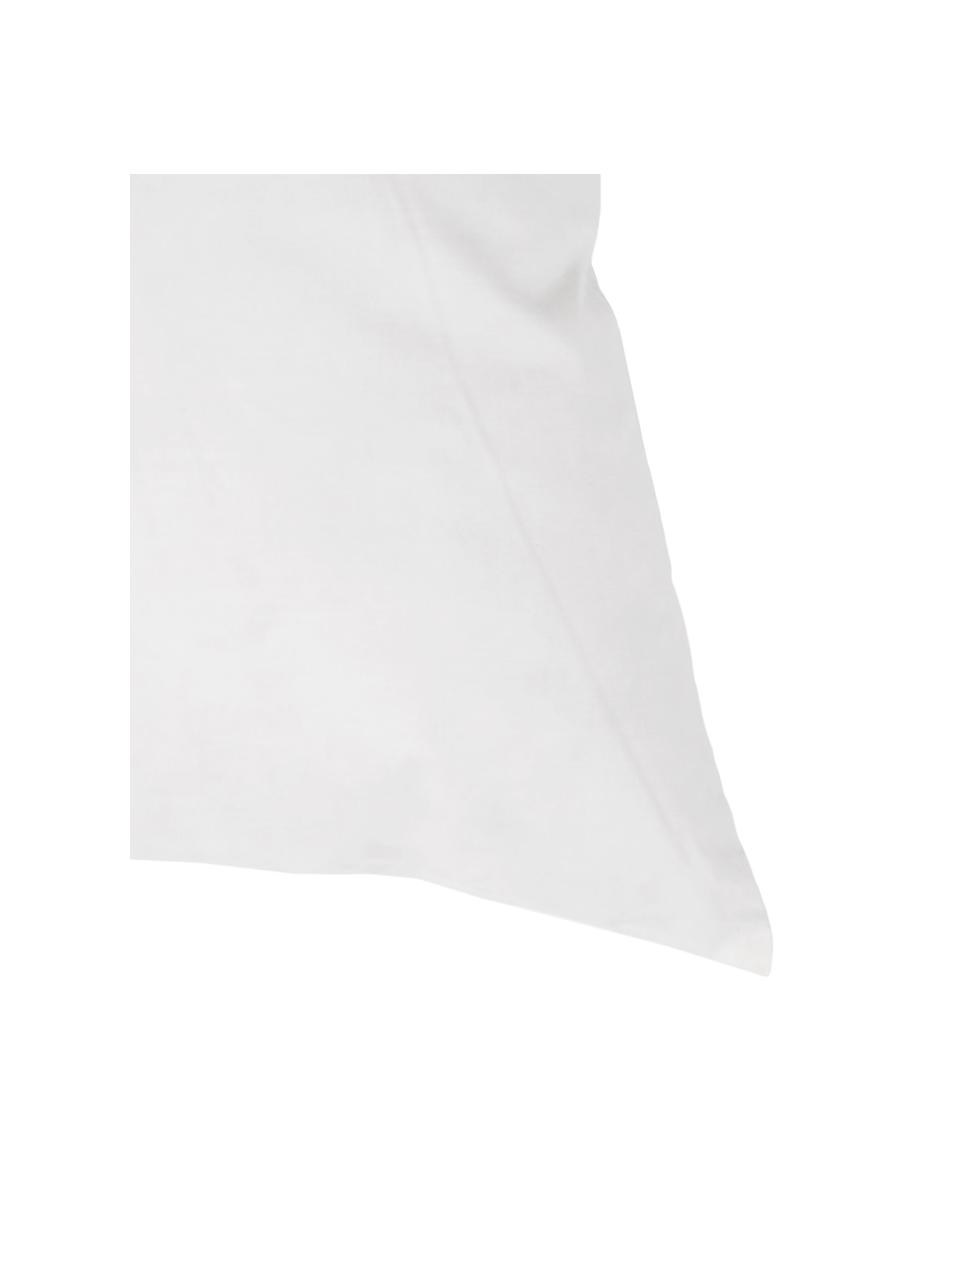 Relleno de cojín Premium, 45 x 45, Funda: percal Mako, 100% algodón, Blanco, An 45 x L 45 cm